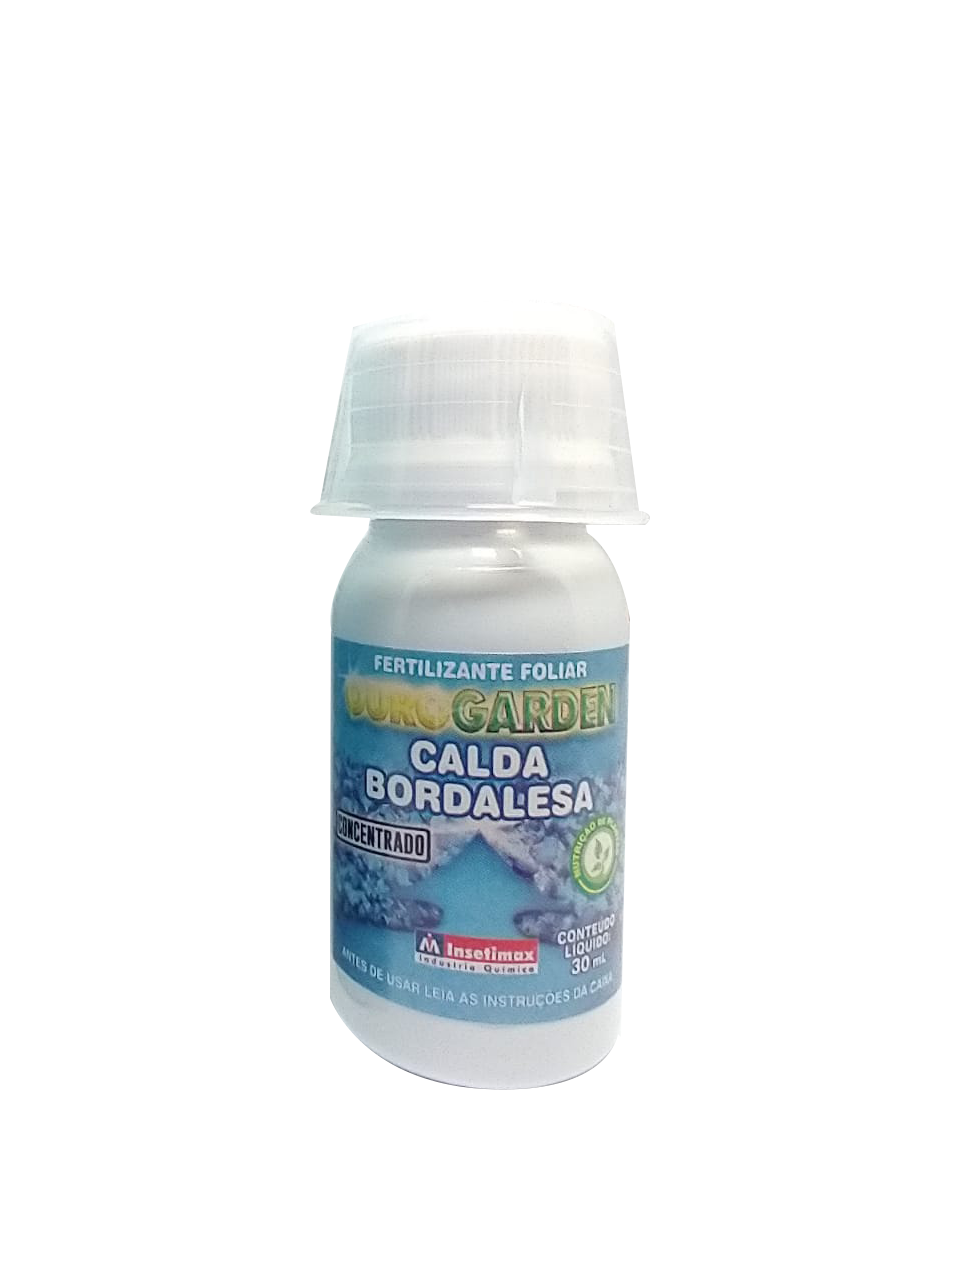 Fertilizante Foliar Calda Bordalesa - 30ml Insetimax